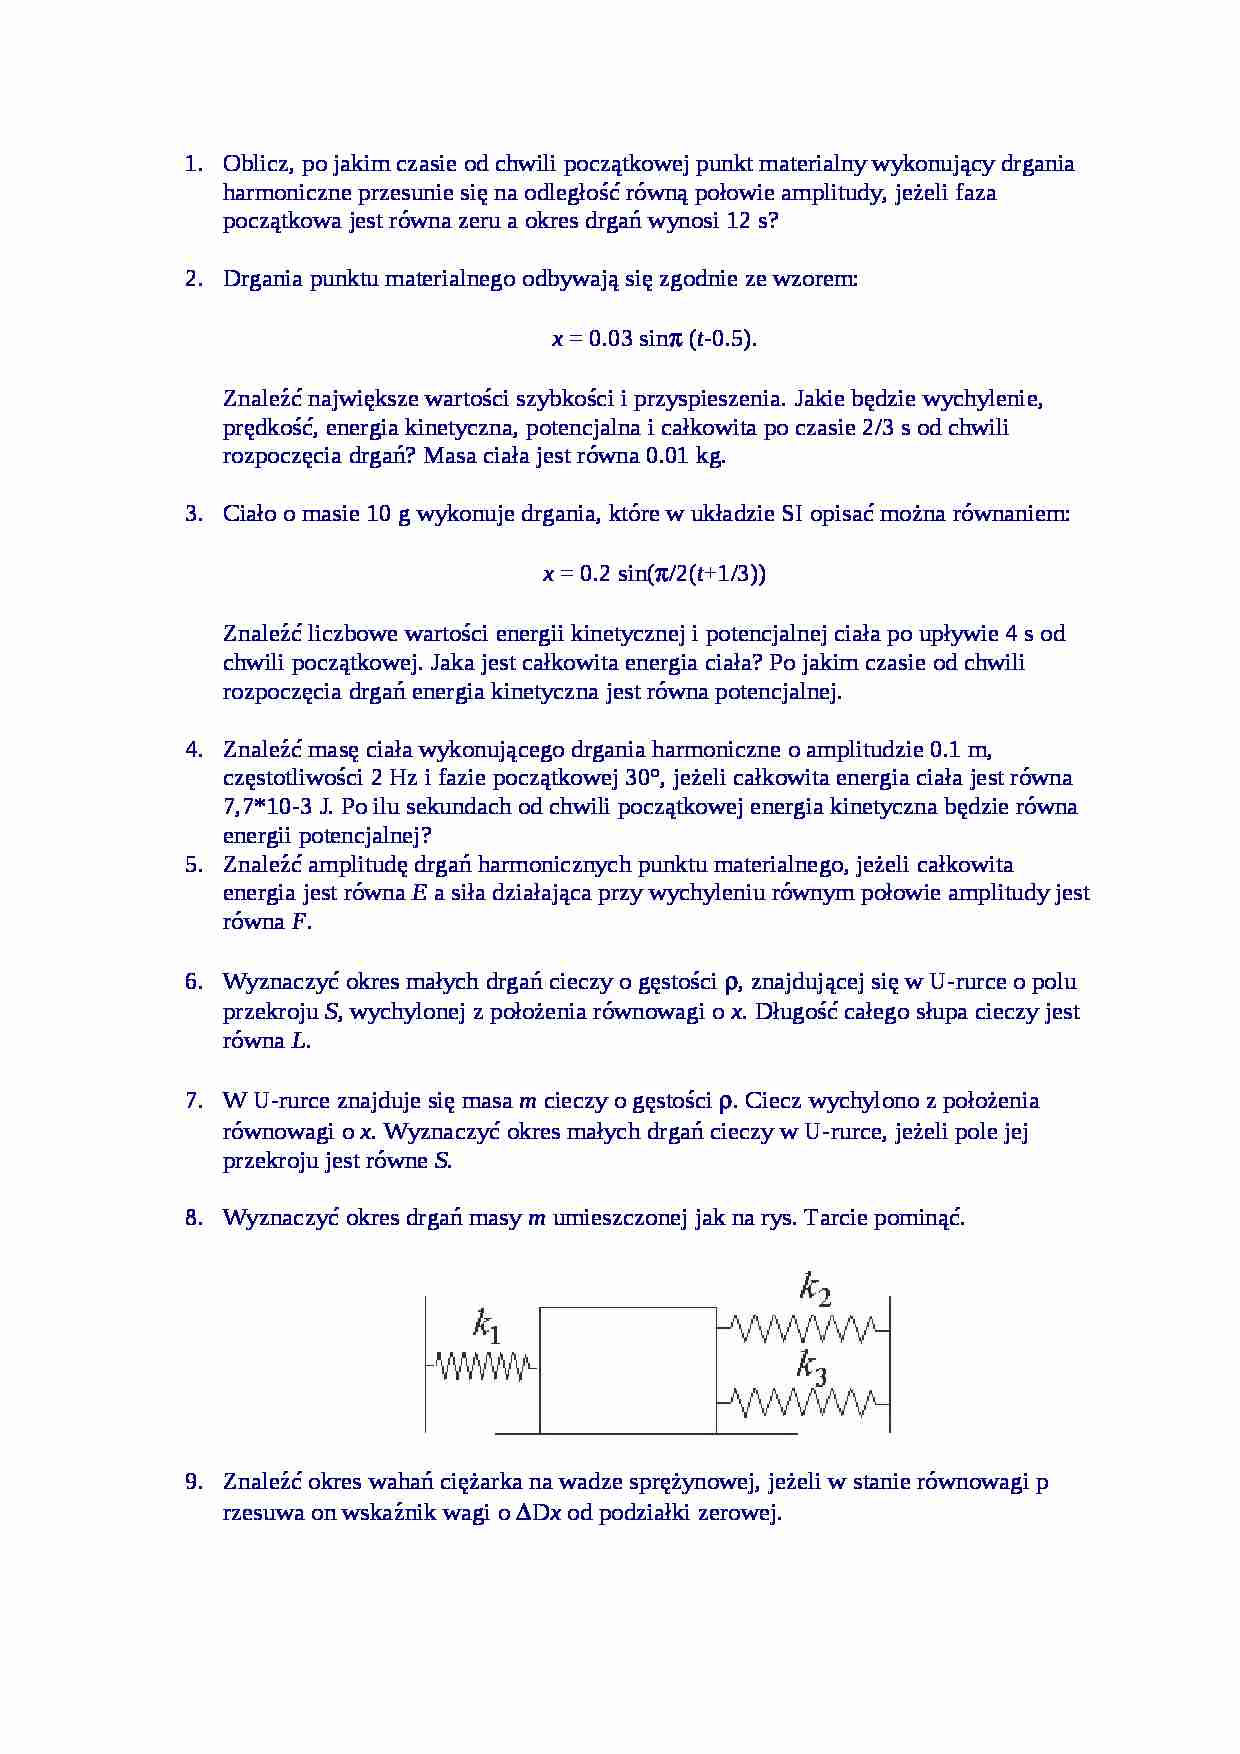 Ruch harmoniczny - Punkt materialny - strona 1